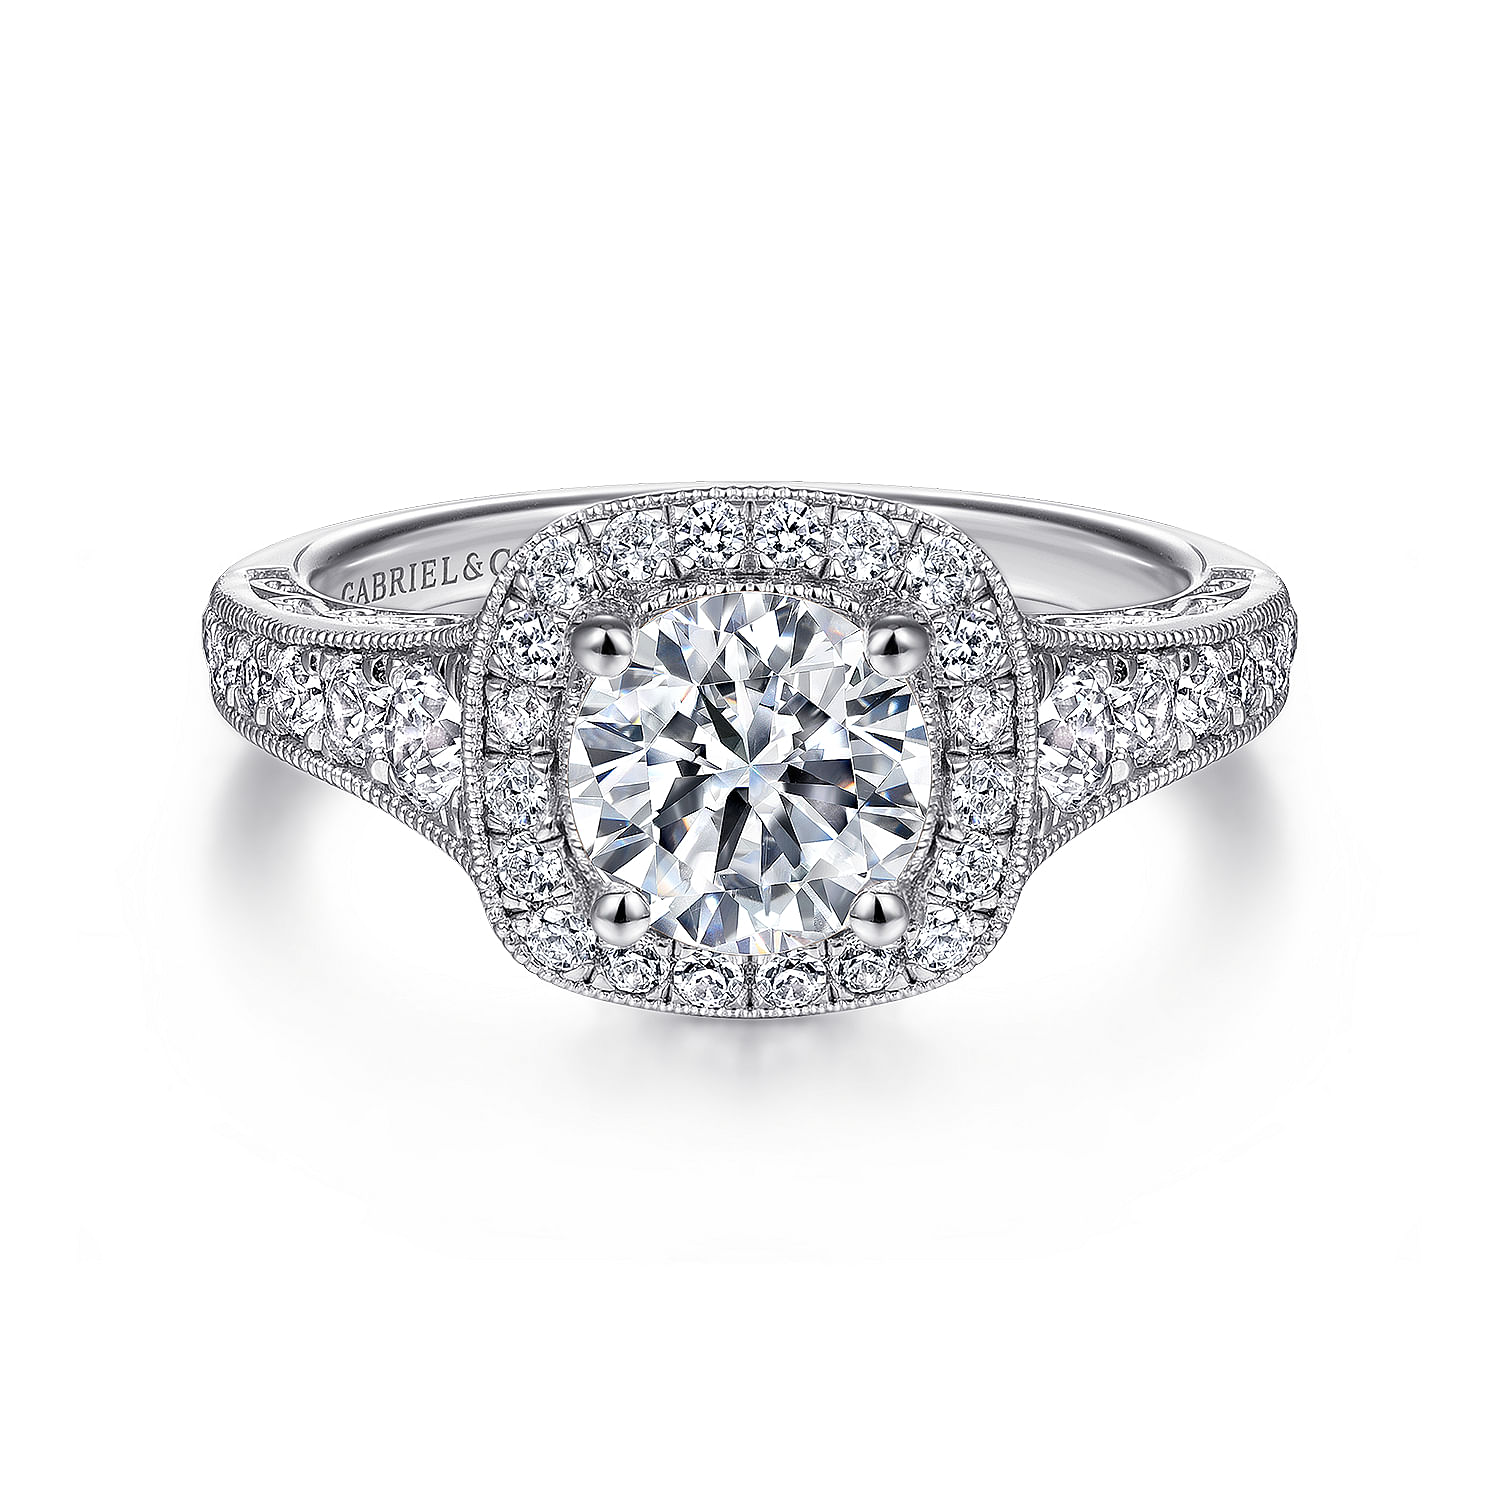 Florence - Vintage Inspired 14K White Gold Cushion Halo Round Diamond Engagement Ring